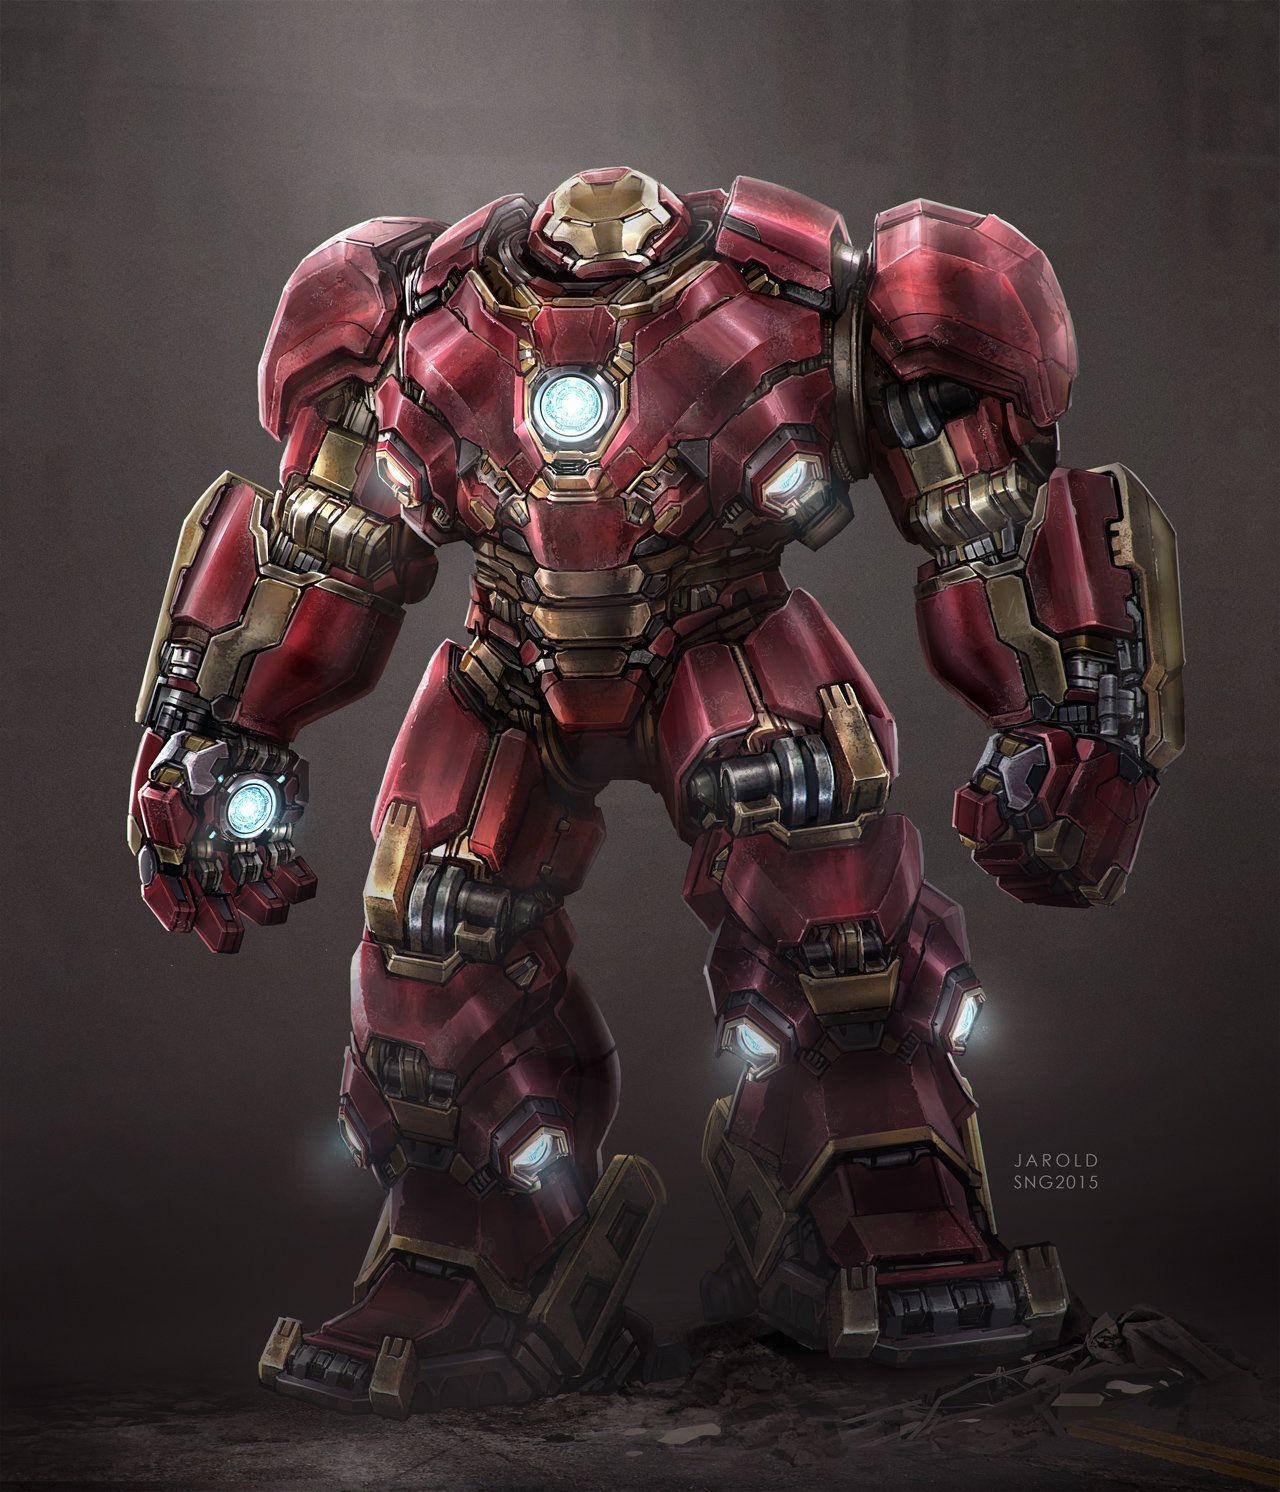 image about Hulk Buster Iron Man